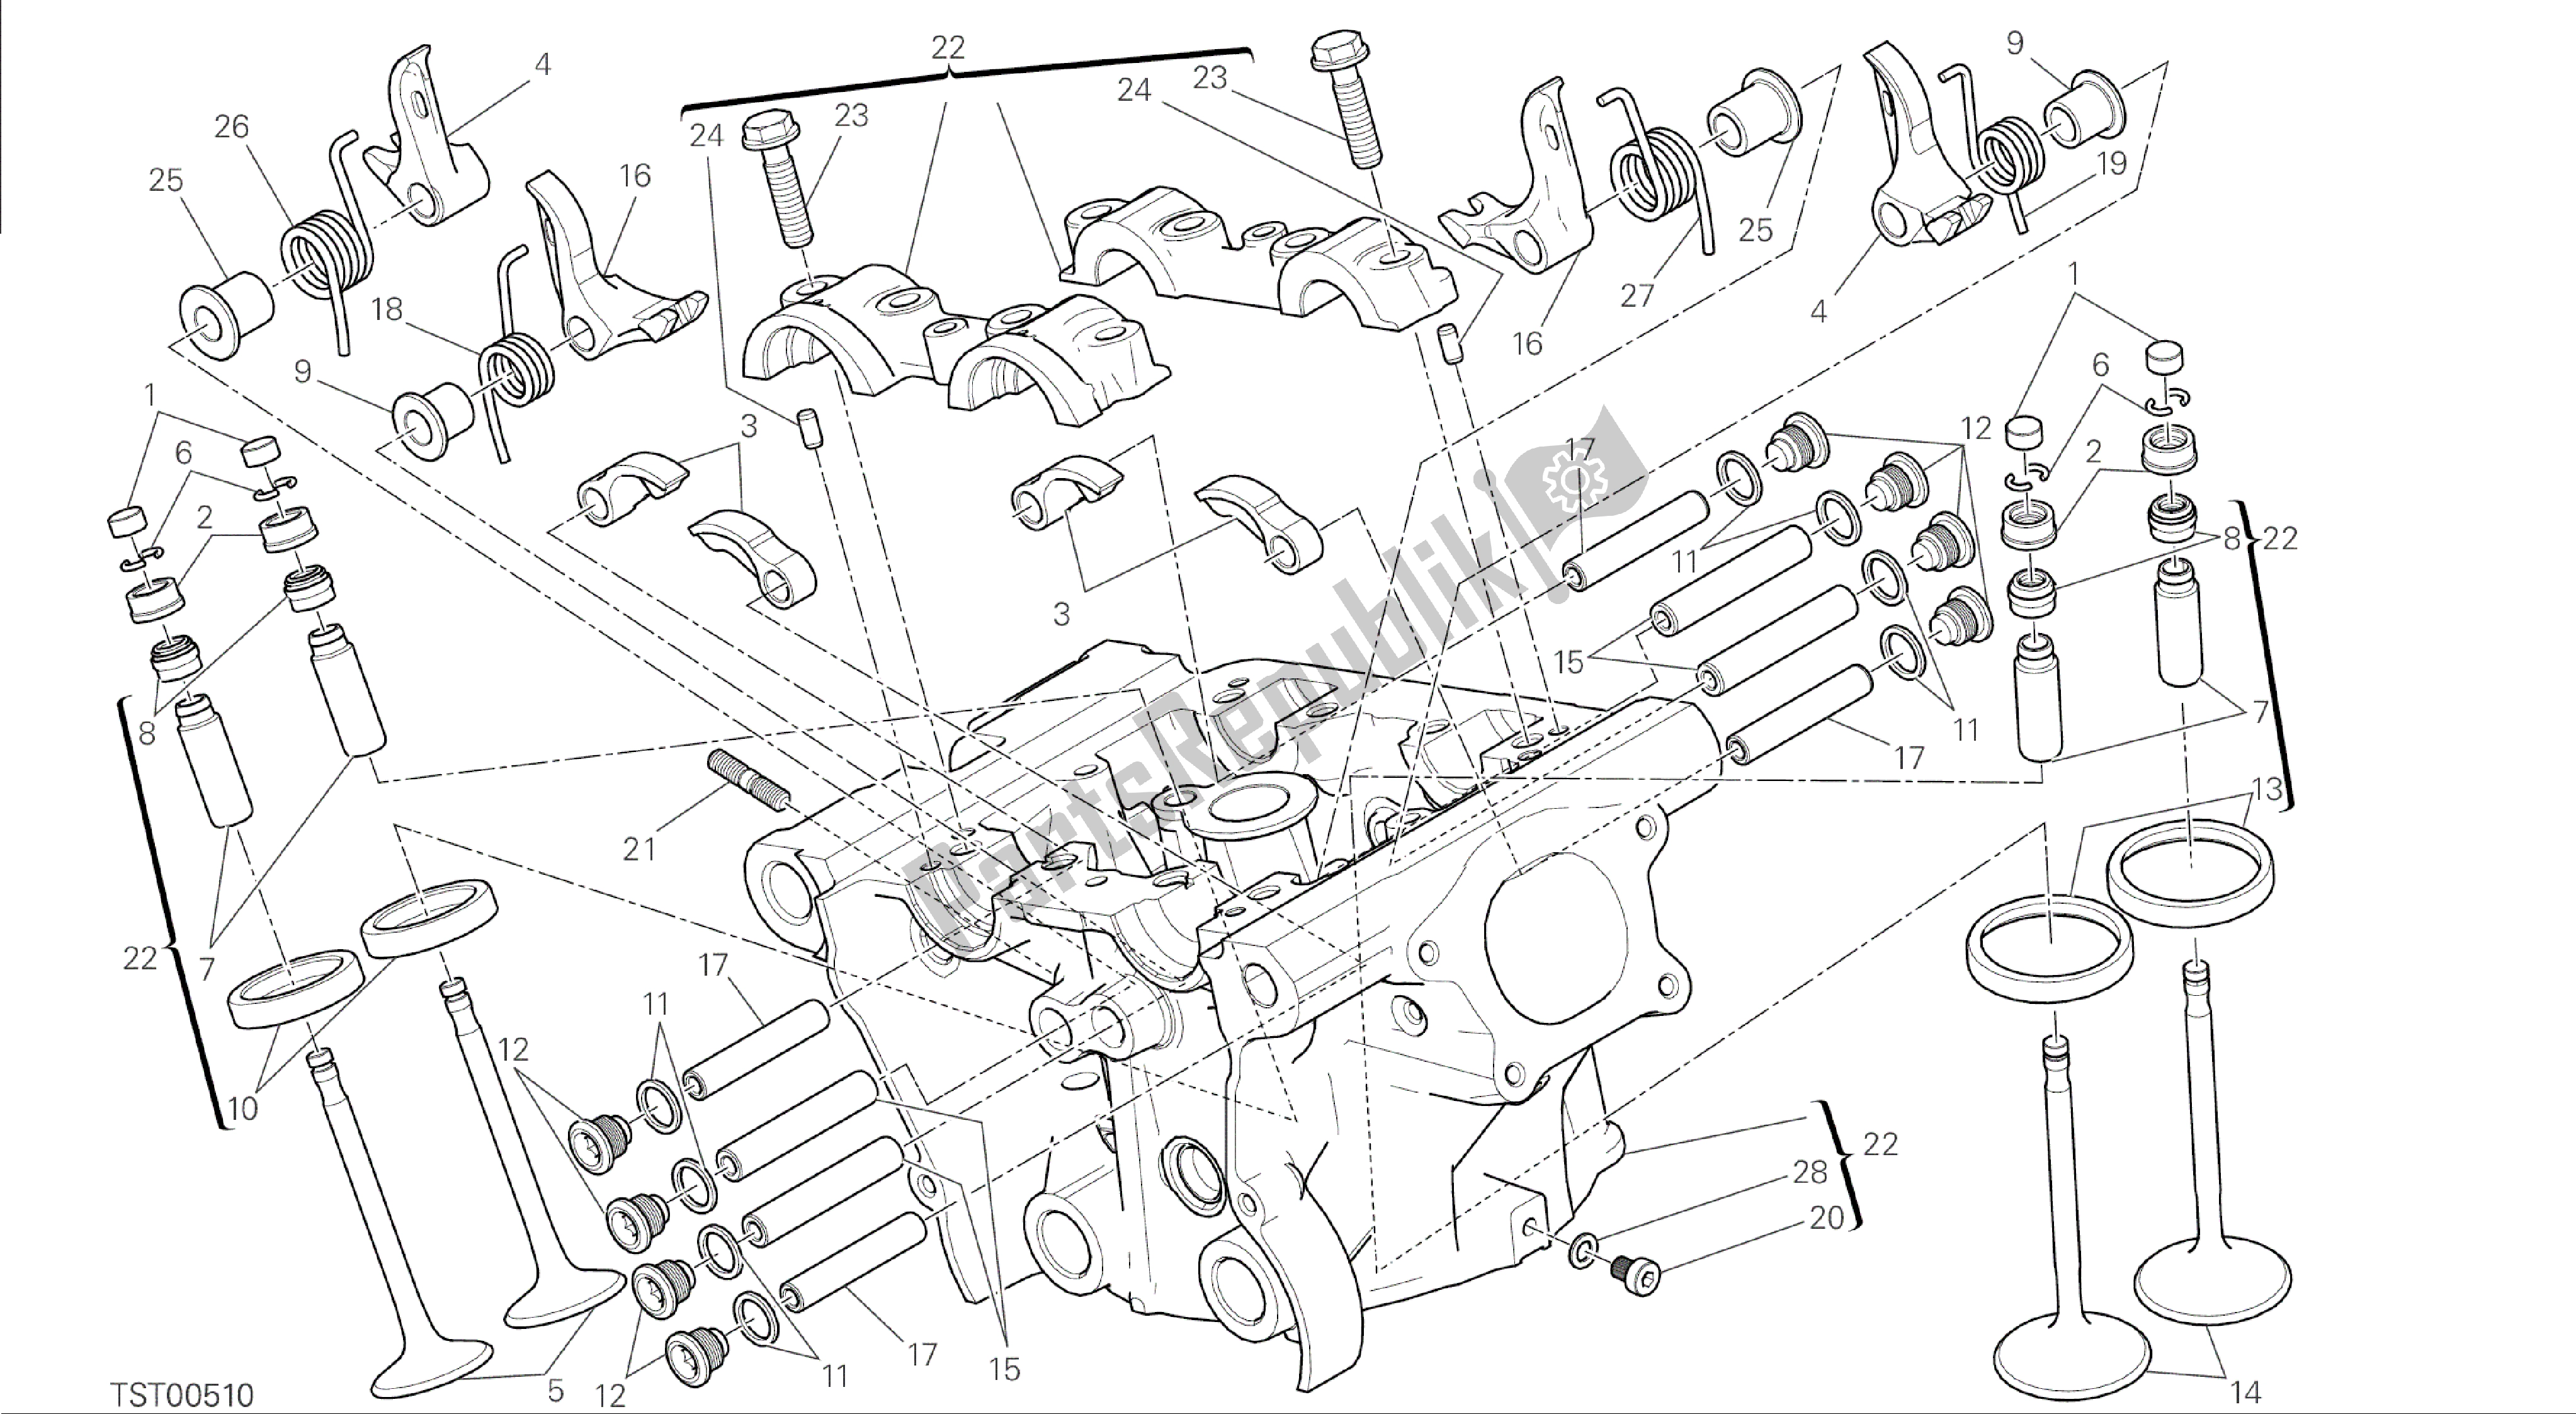 Todas las partes para Dibujo 014 - Motor De Grupo De Cabezal Vertical [mod: M 1200] de Ducati Monster 1200 2014